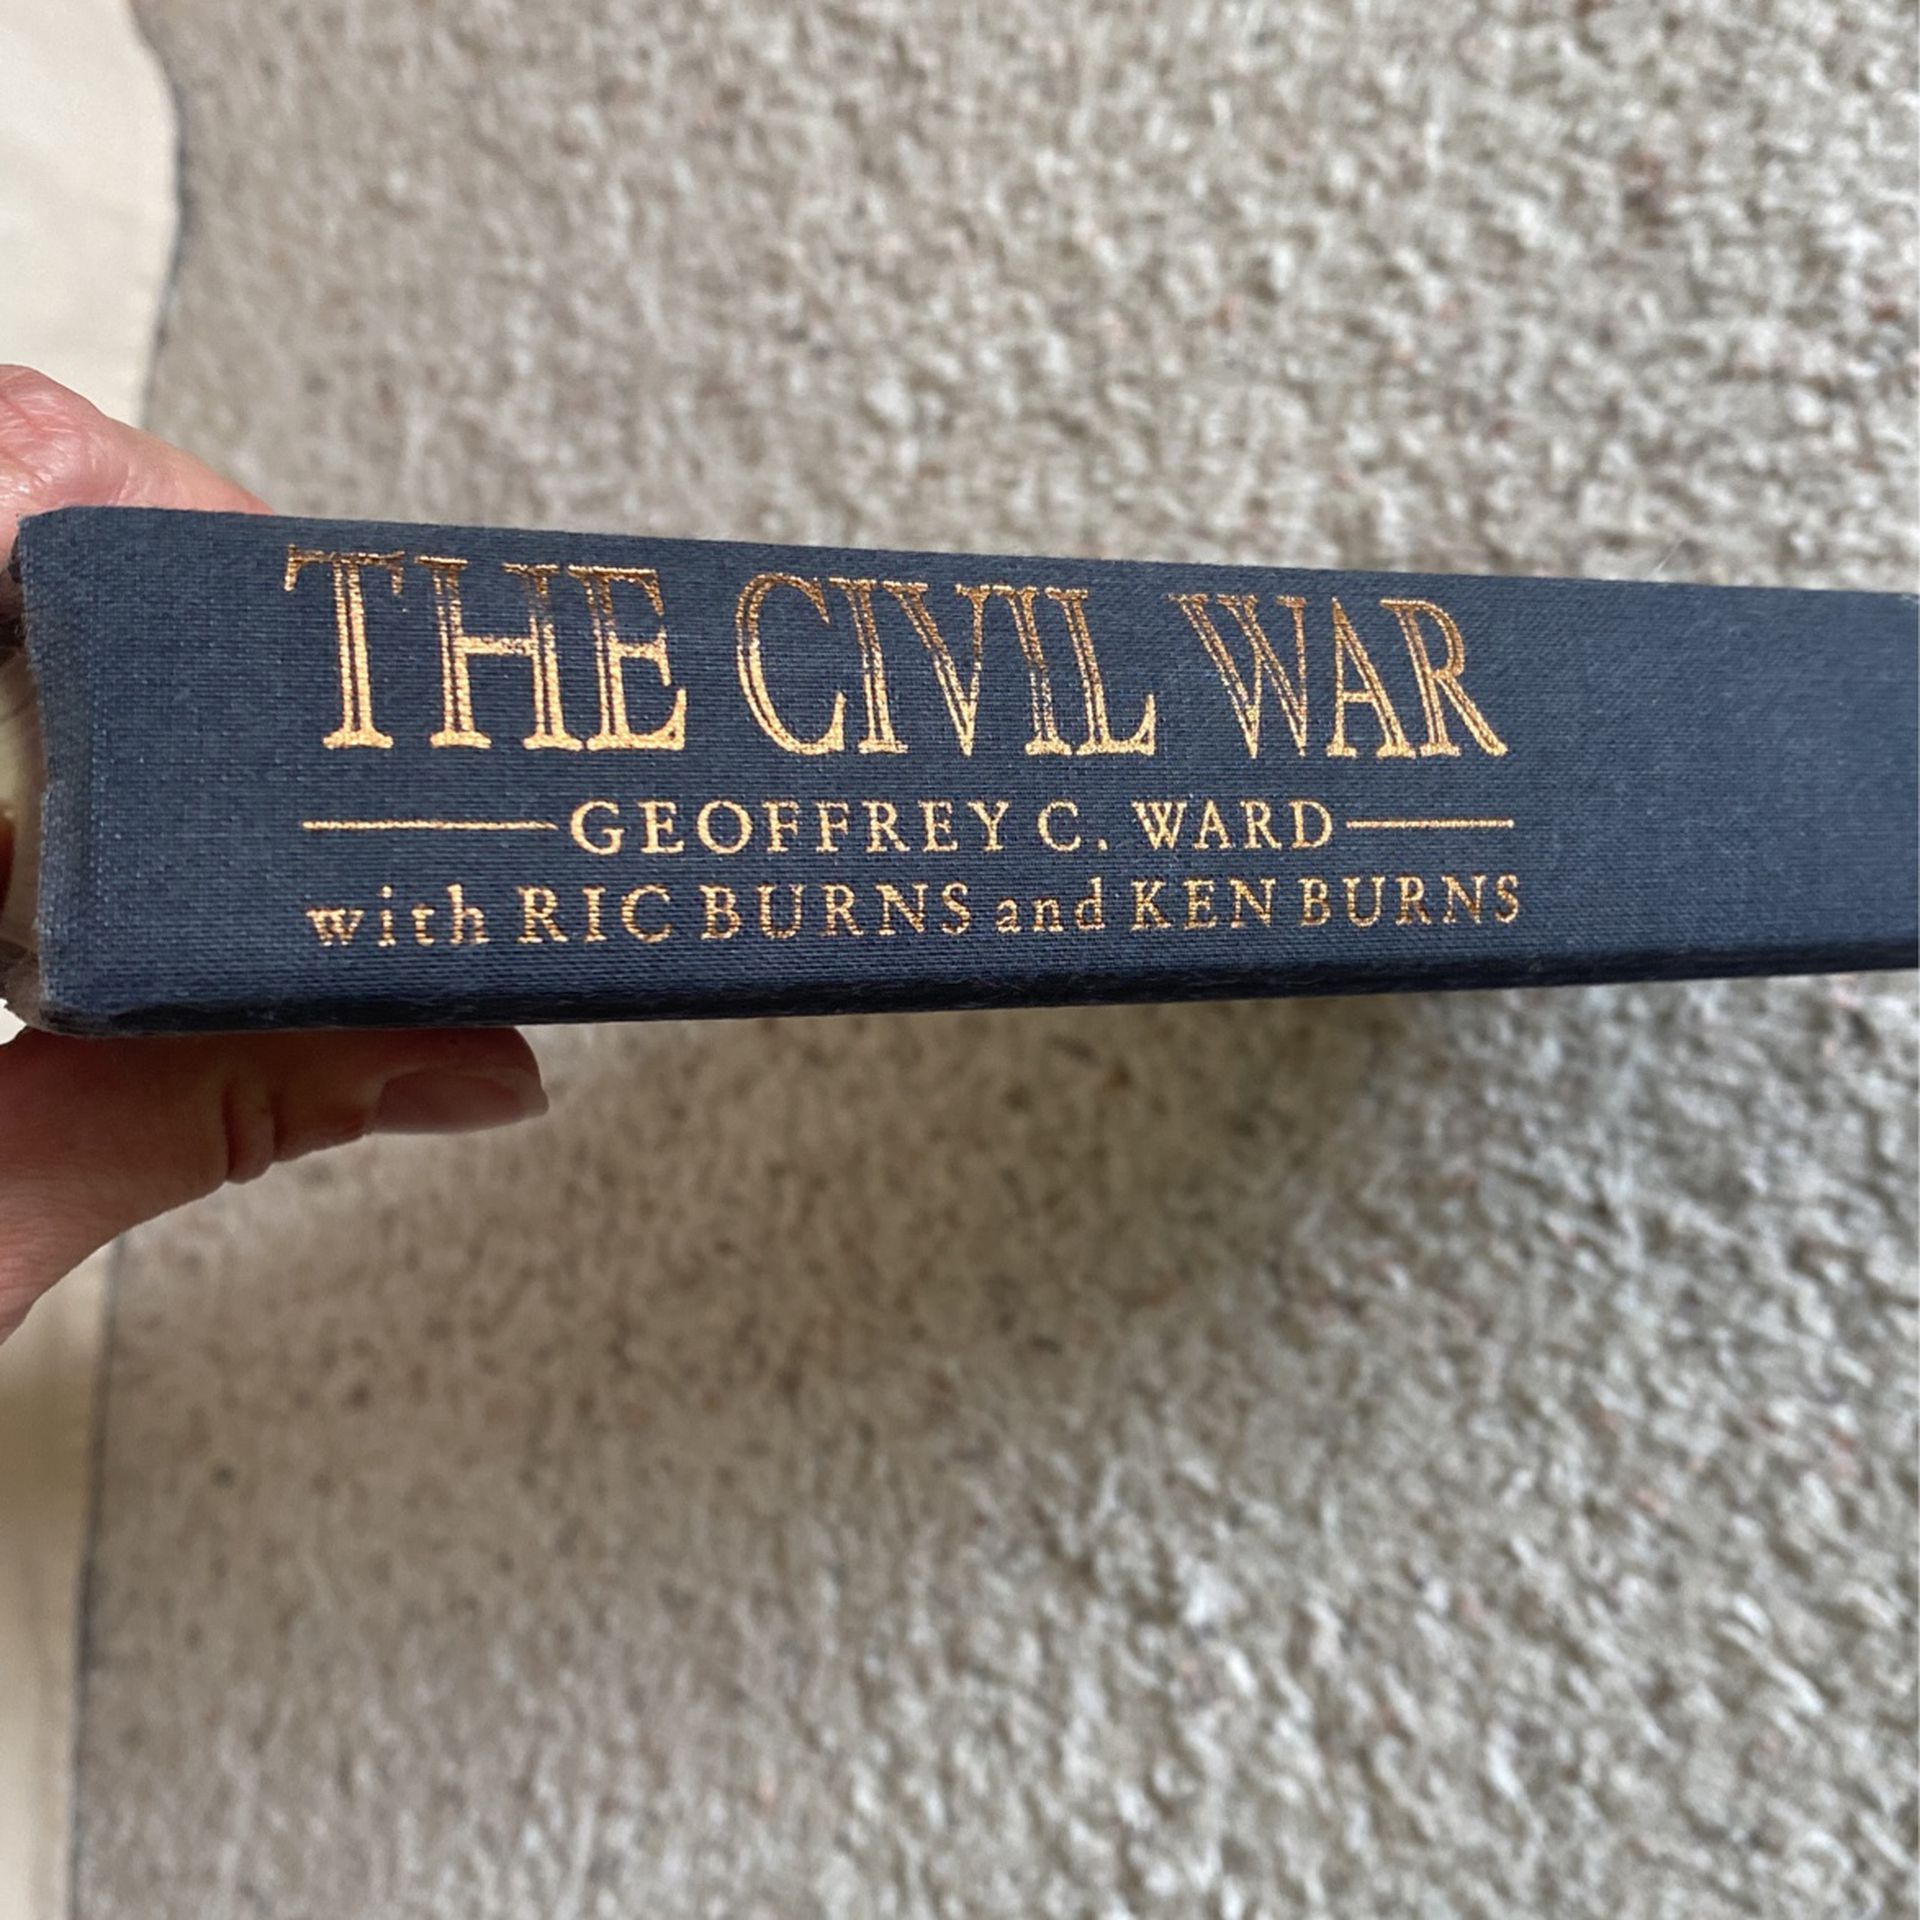 The Civil War Book